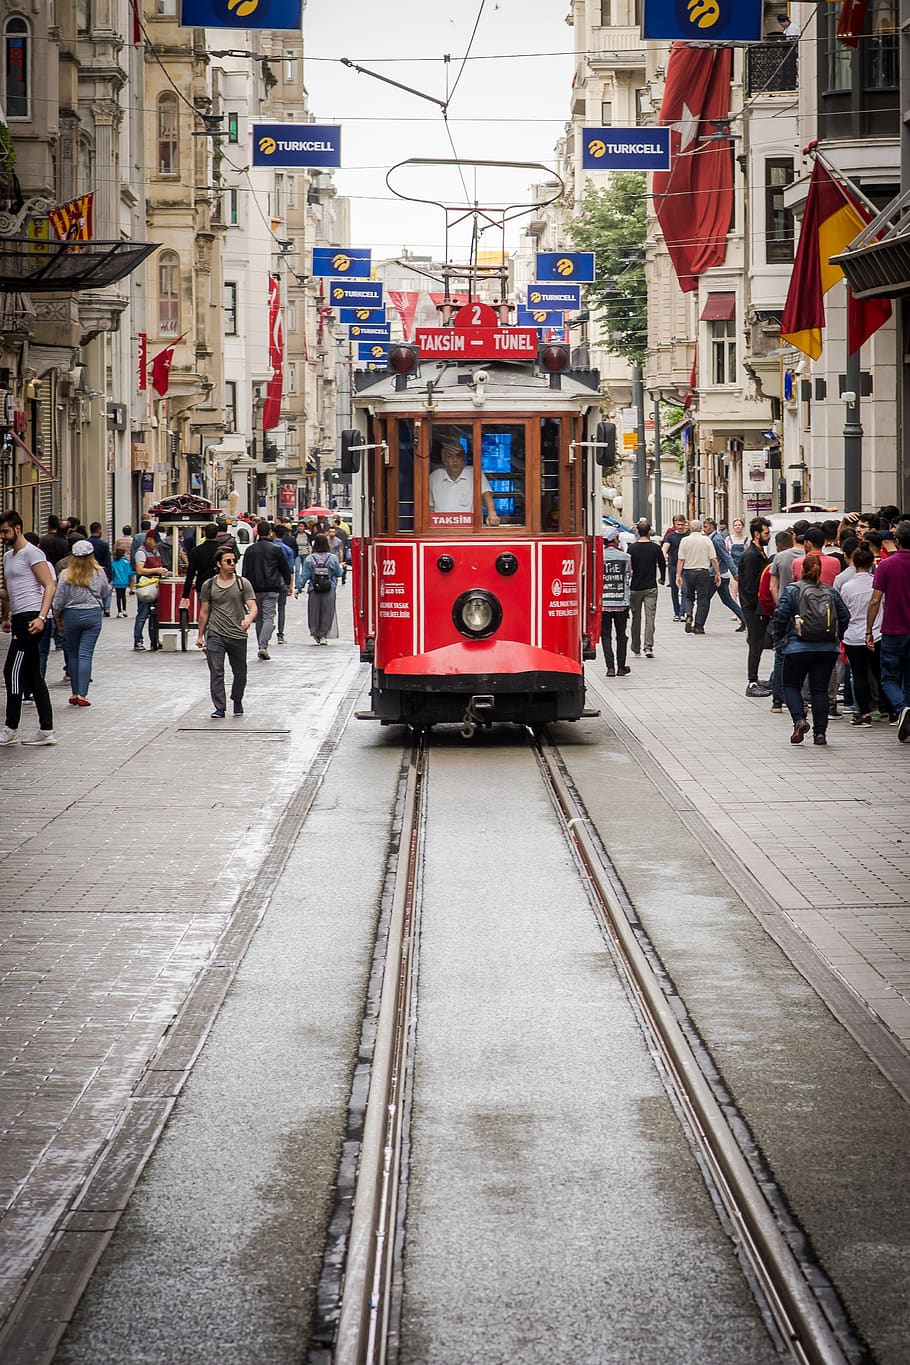 tram, taksim square, city, historical, retro, urban, transport